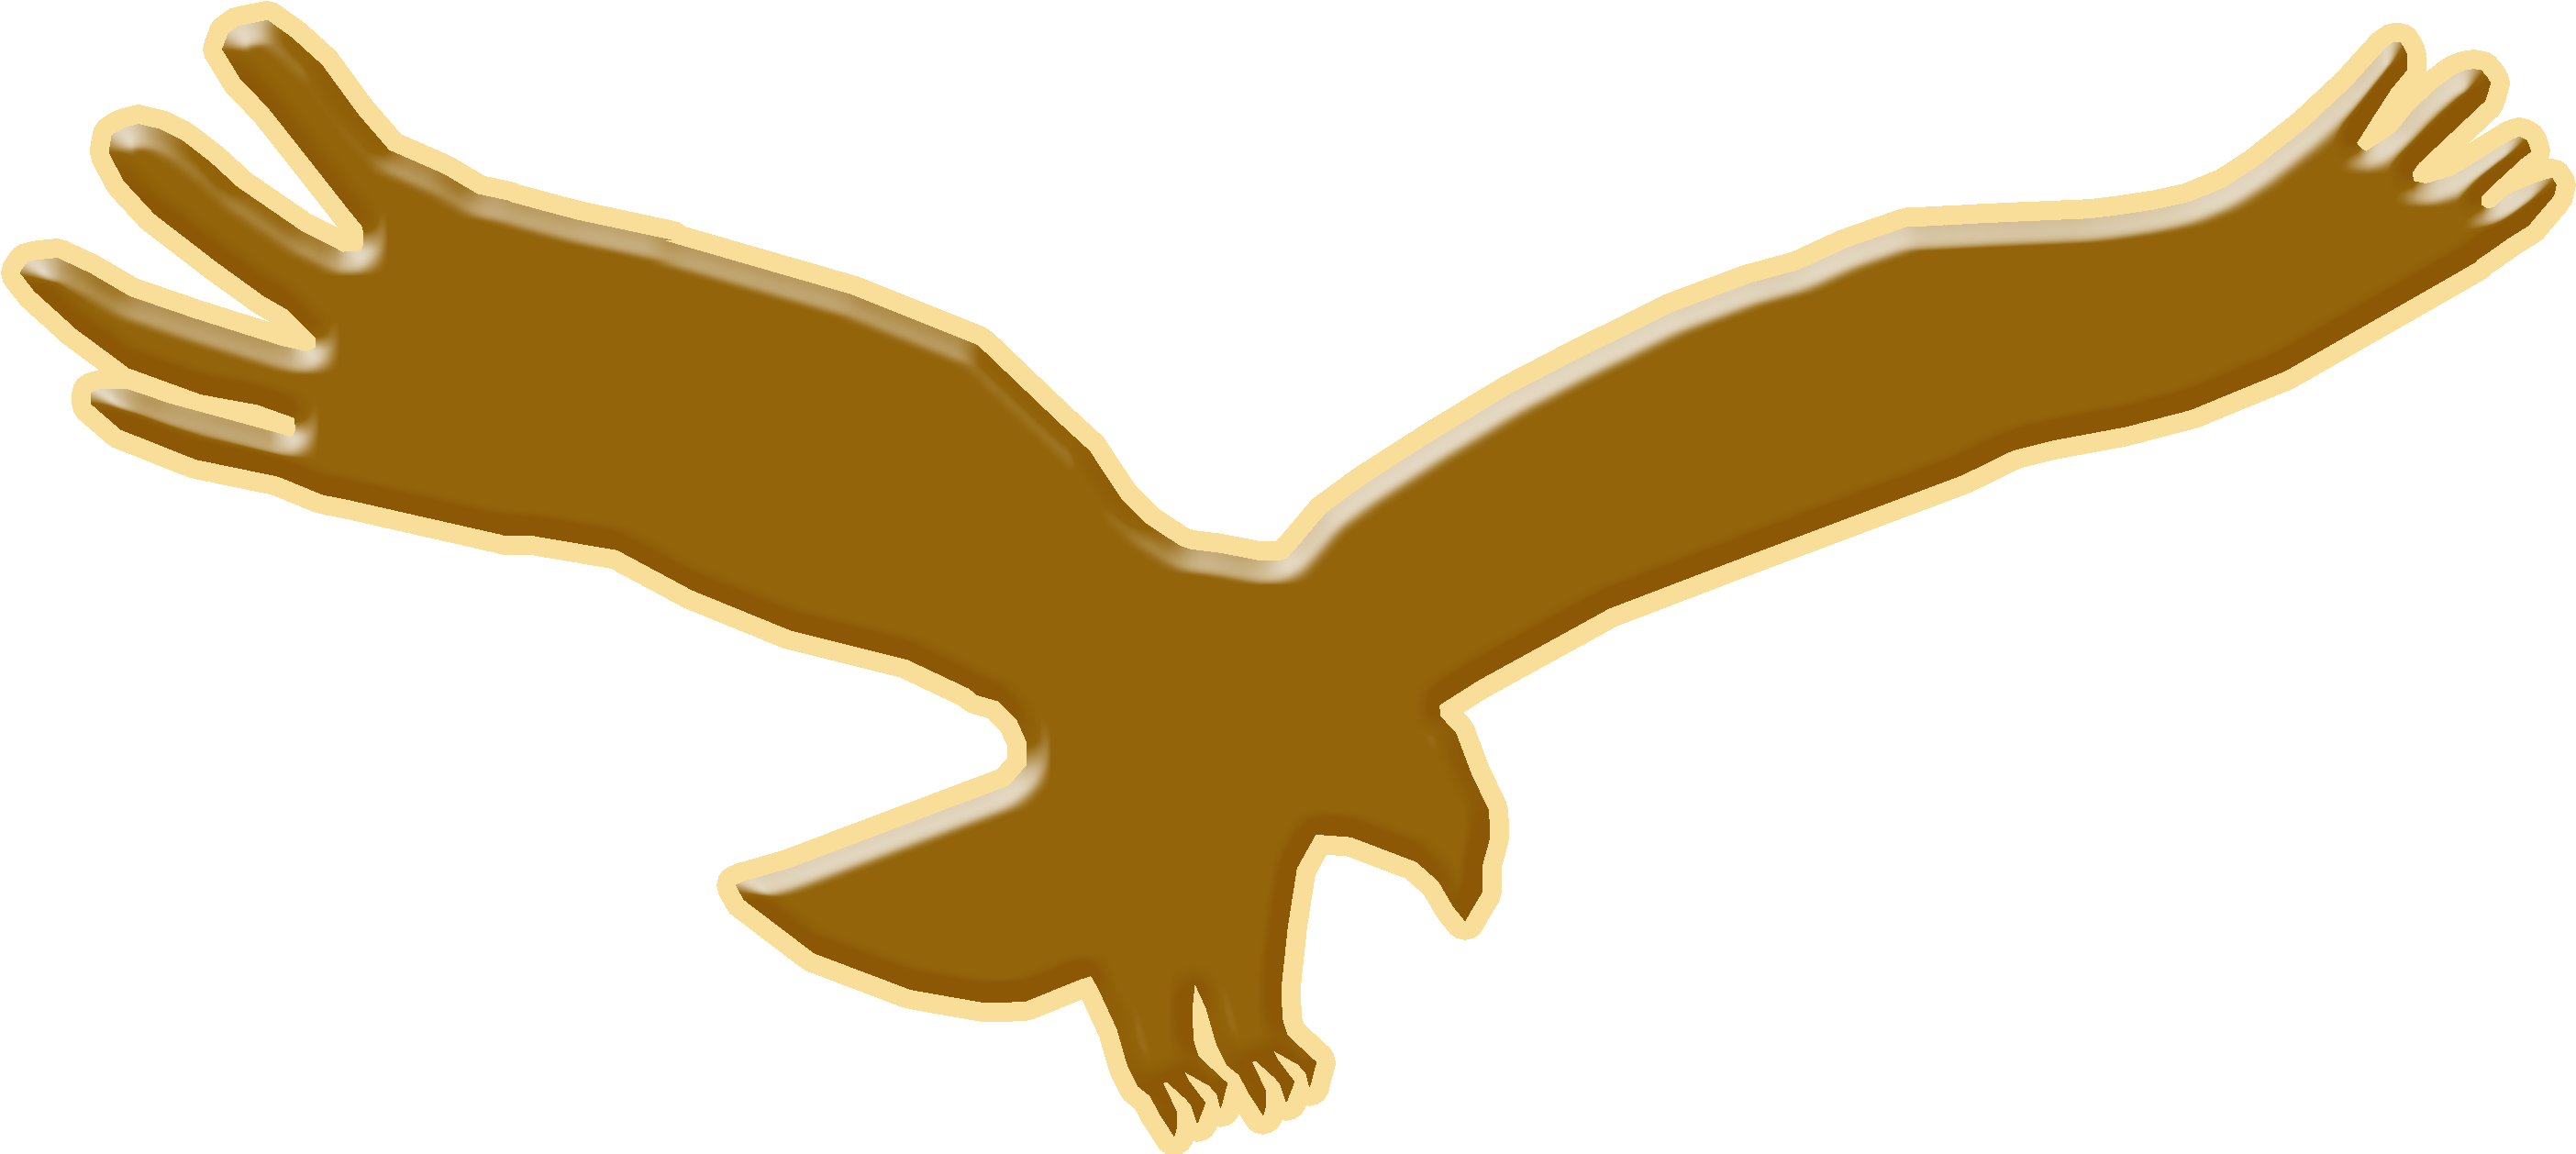 Hawkeyeproductions - Animated Hawk (2956x1352)